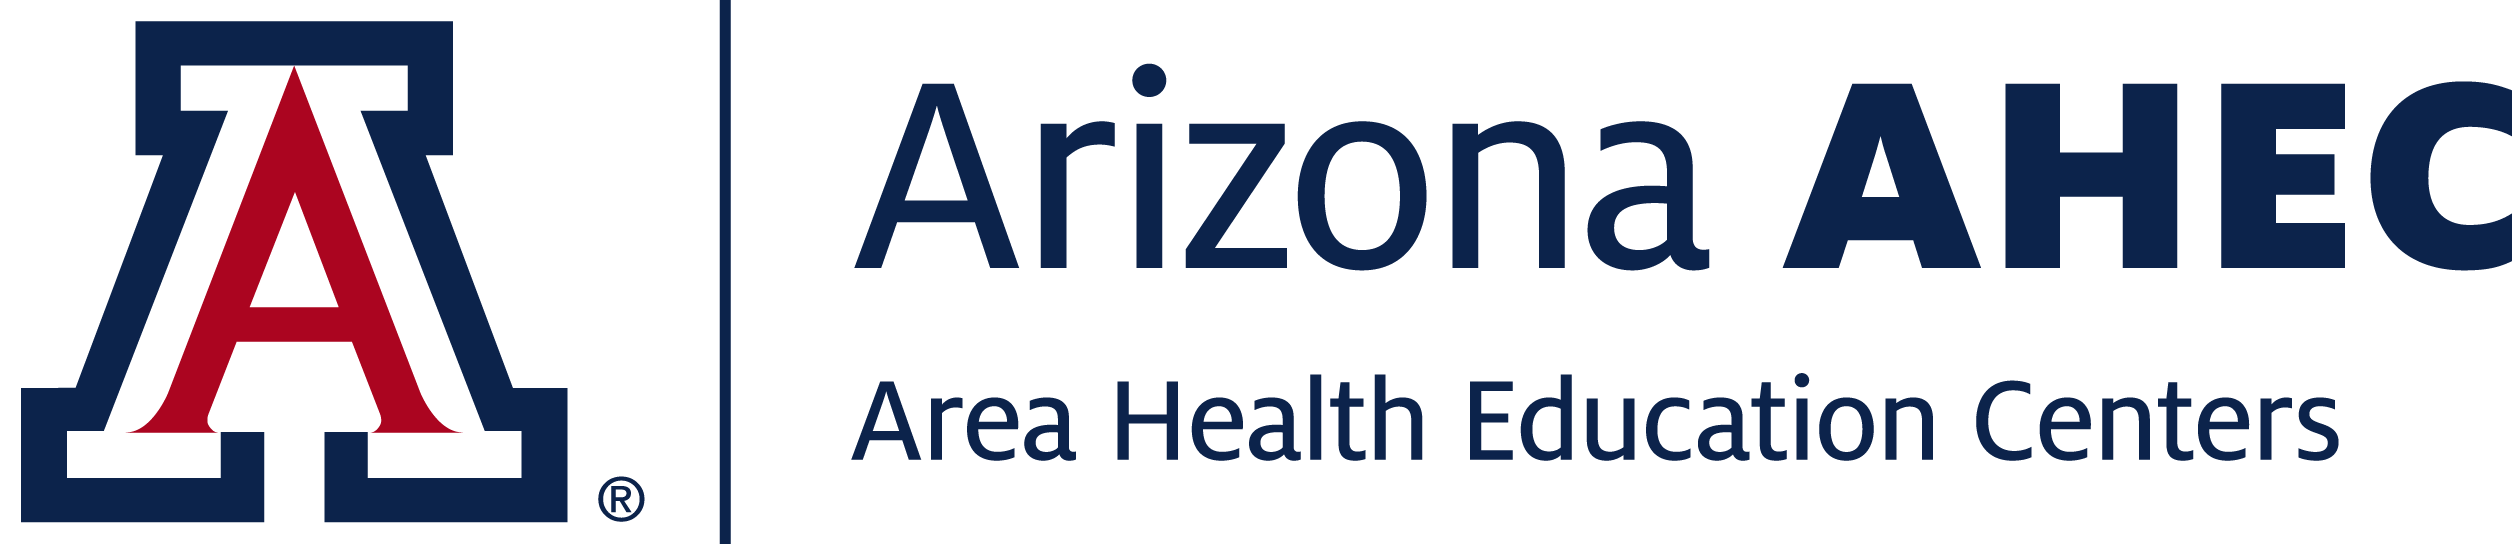 Arizona Area Health Education Centers | Home